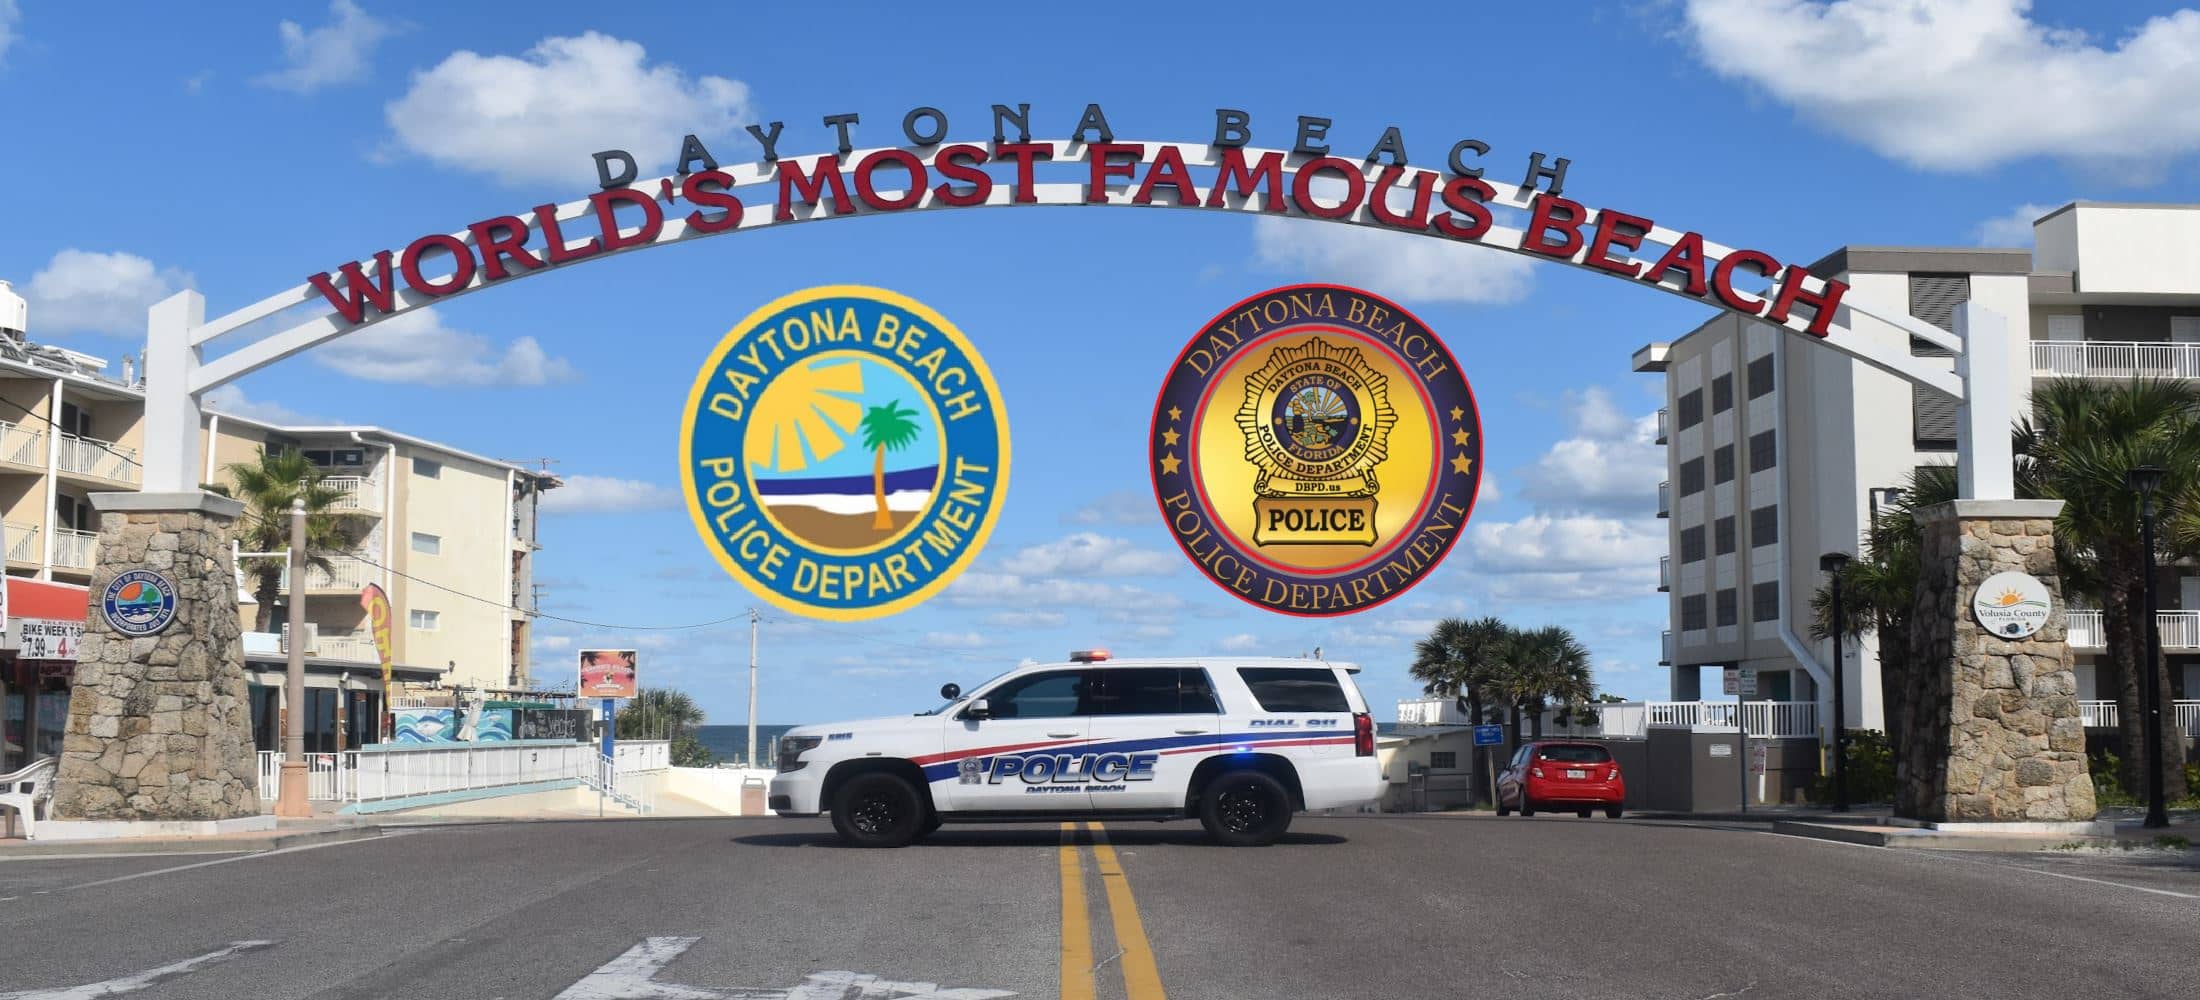 Image of City of Daytona Beach Police Department